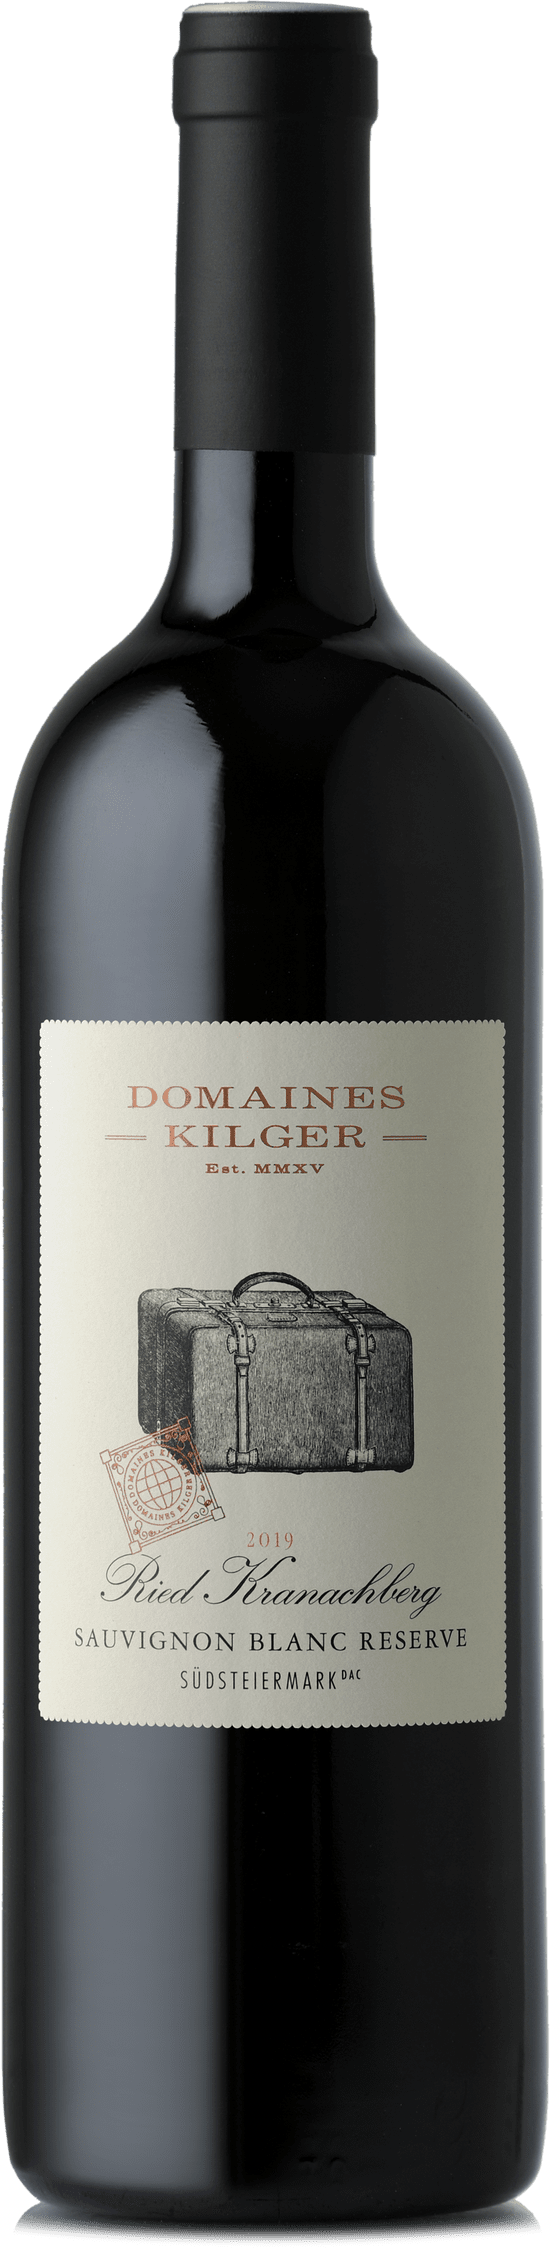 2019 Magnum Sauvignon Blanc Ried KRANACHBERG Reserve DAC